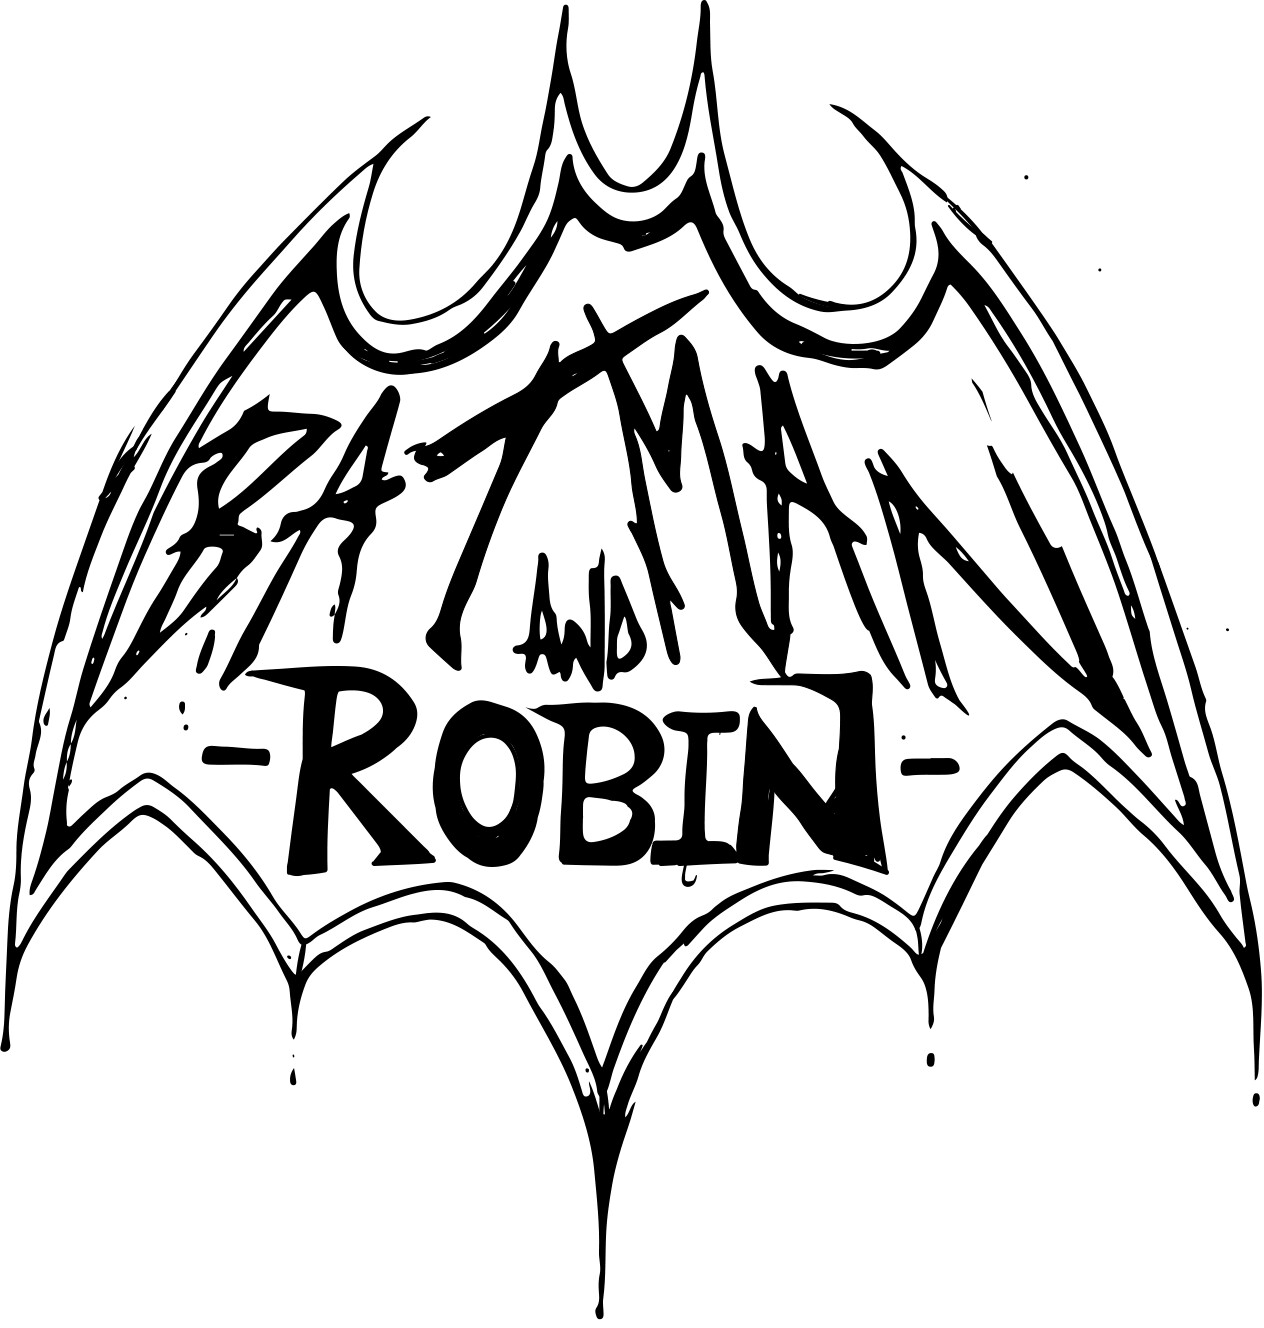 batman and robin symbol black and white